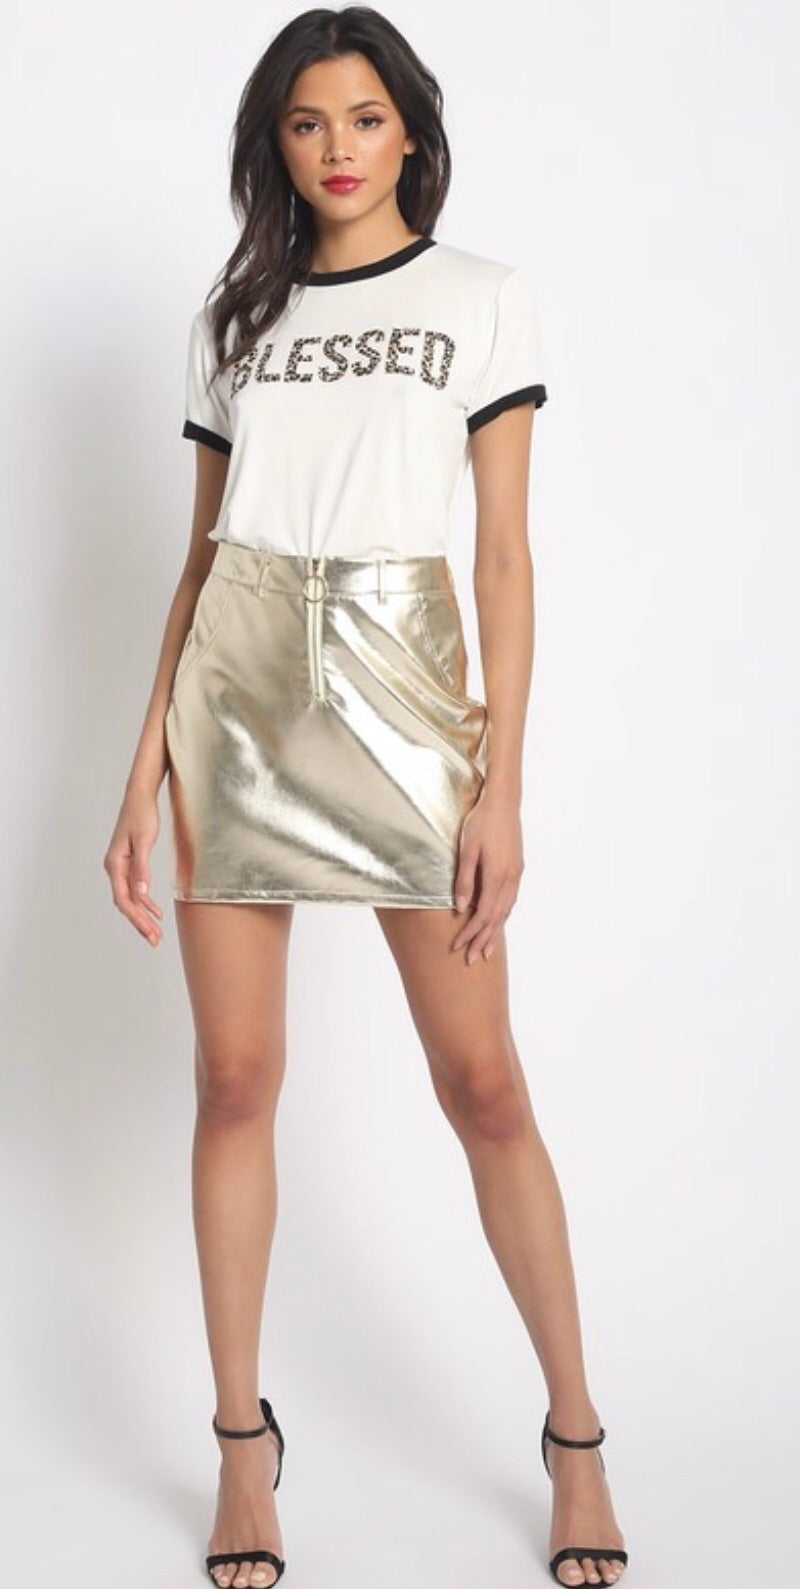 The Mischa Metallic Skirt